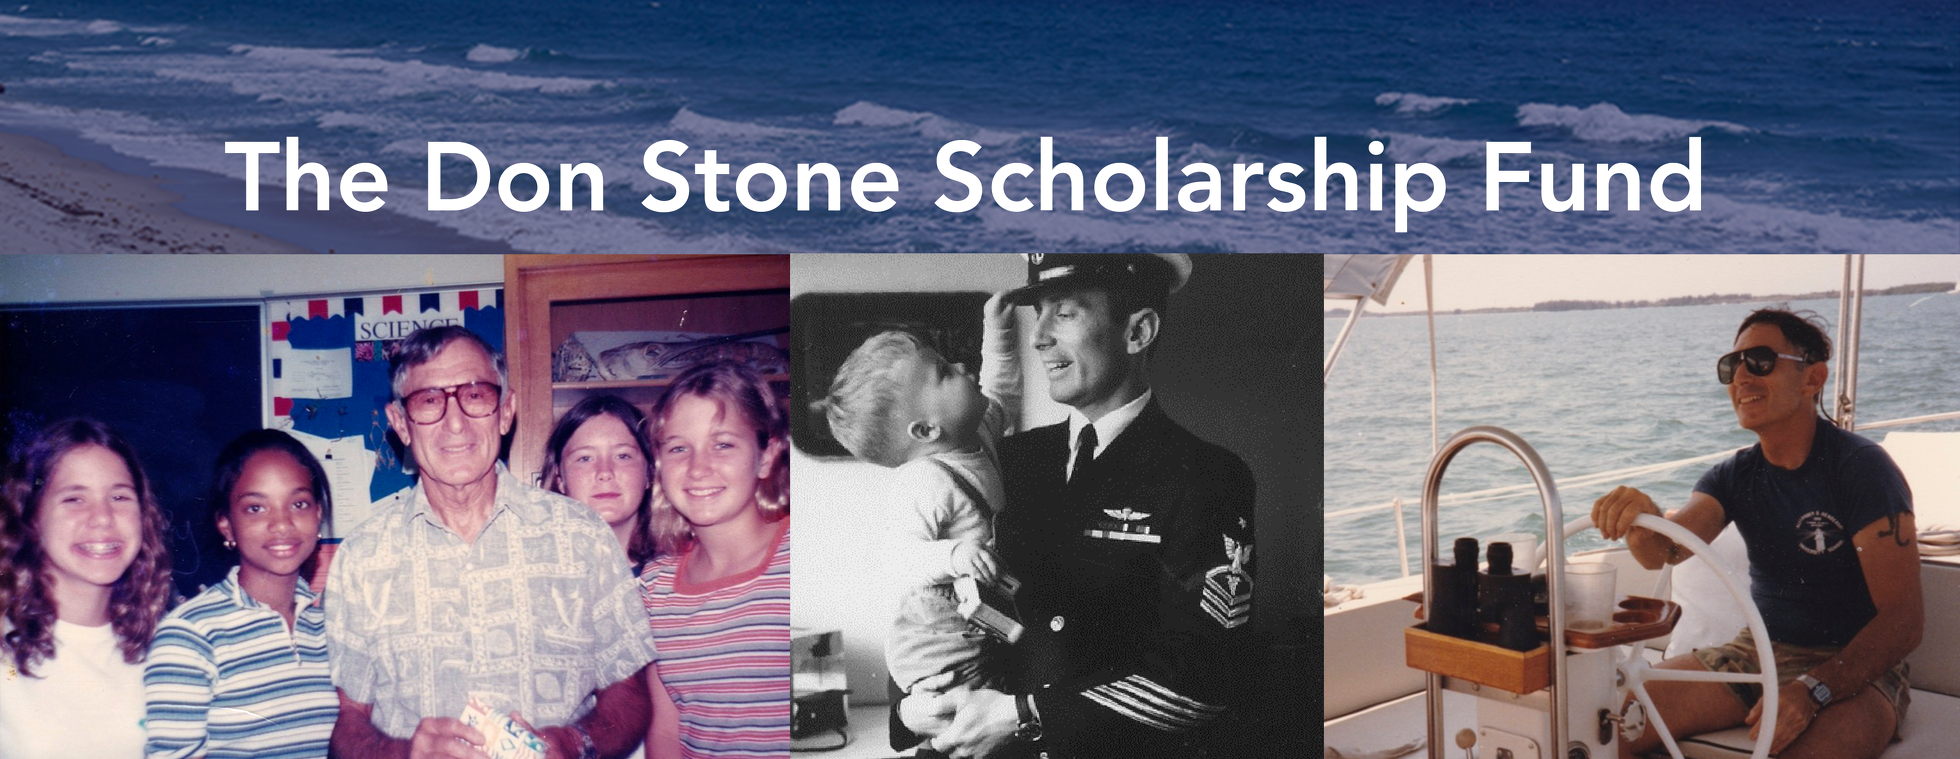 The Don Stone Scholarship Fund